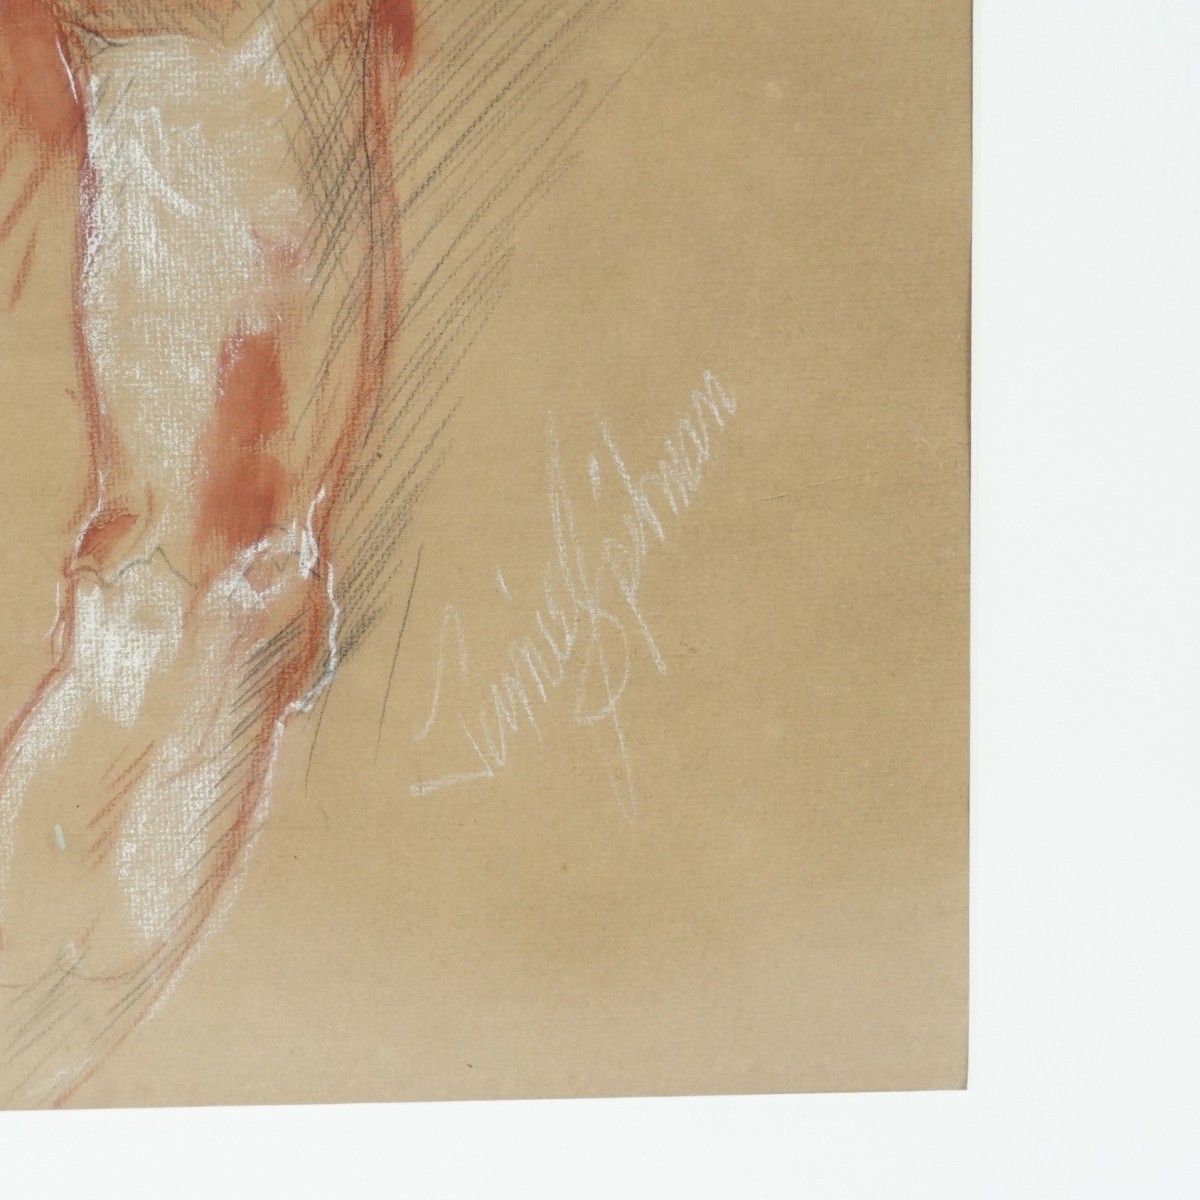 J Spillman (20C) Gouache on Paper Nude